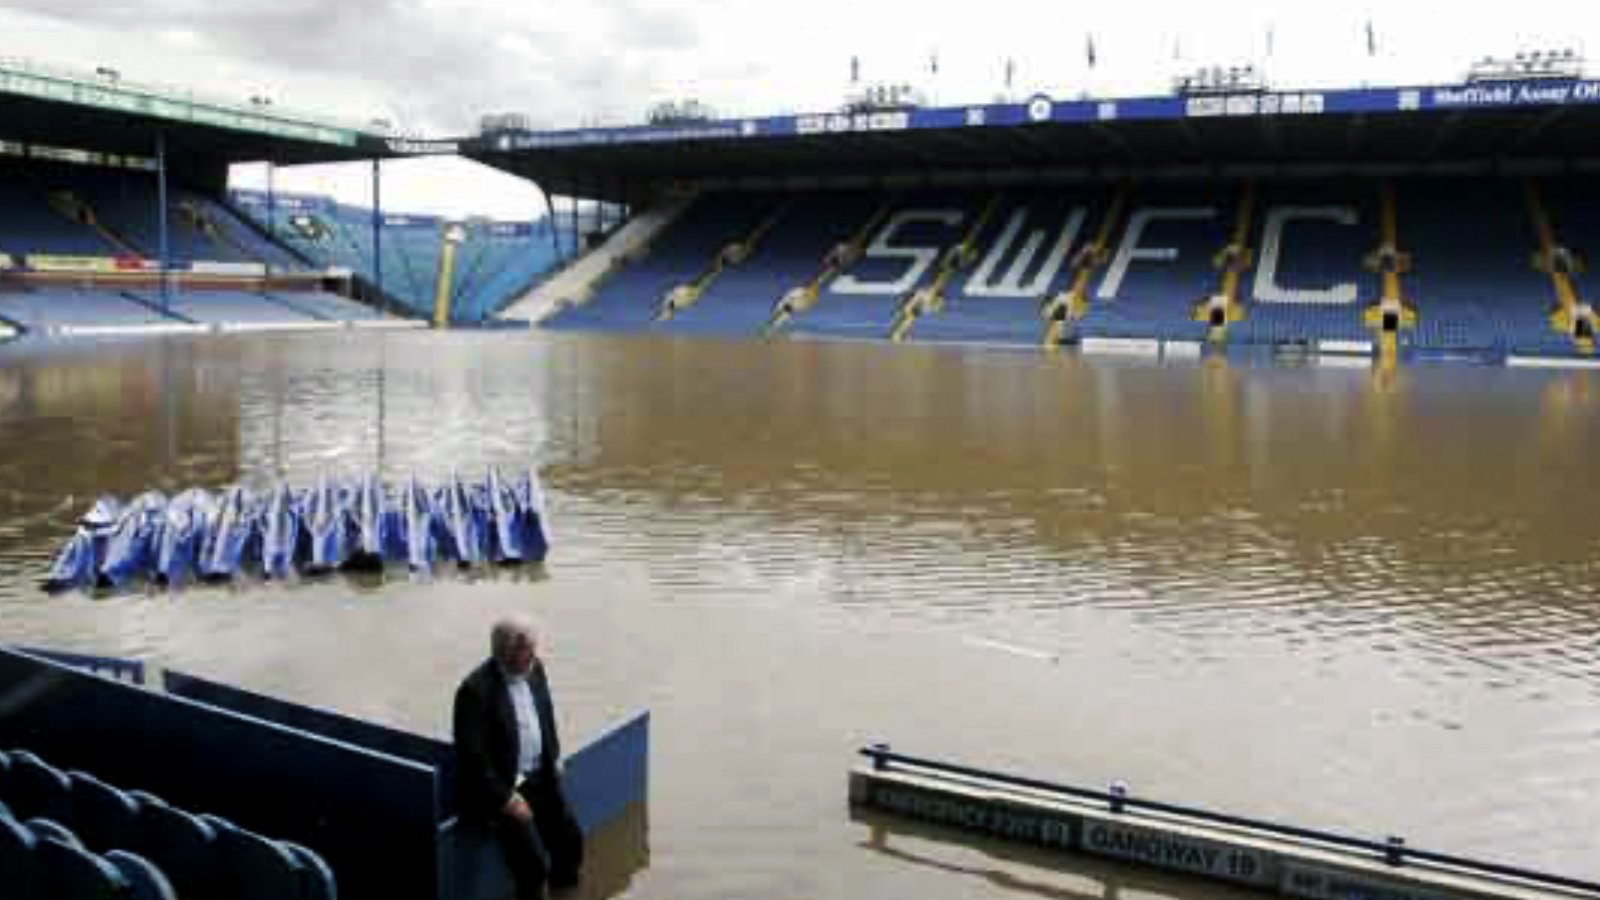 Sheffield Wednesday's Hillsborough Stadium Flooded